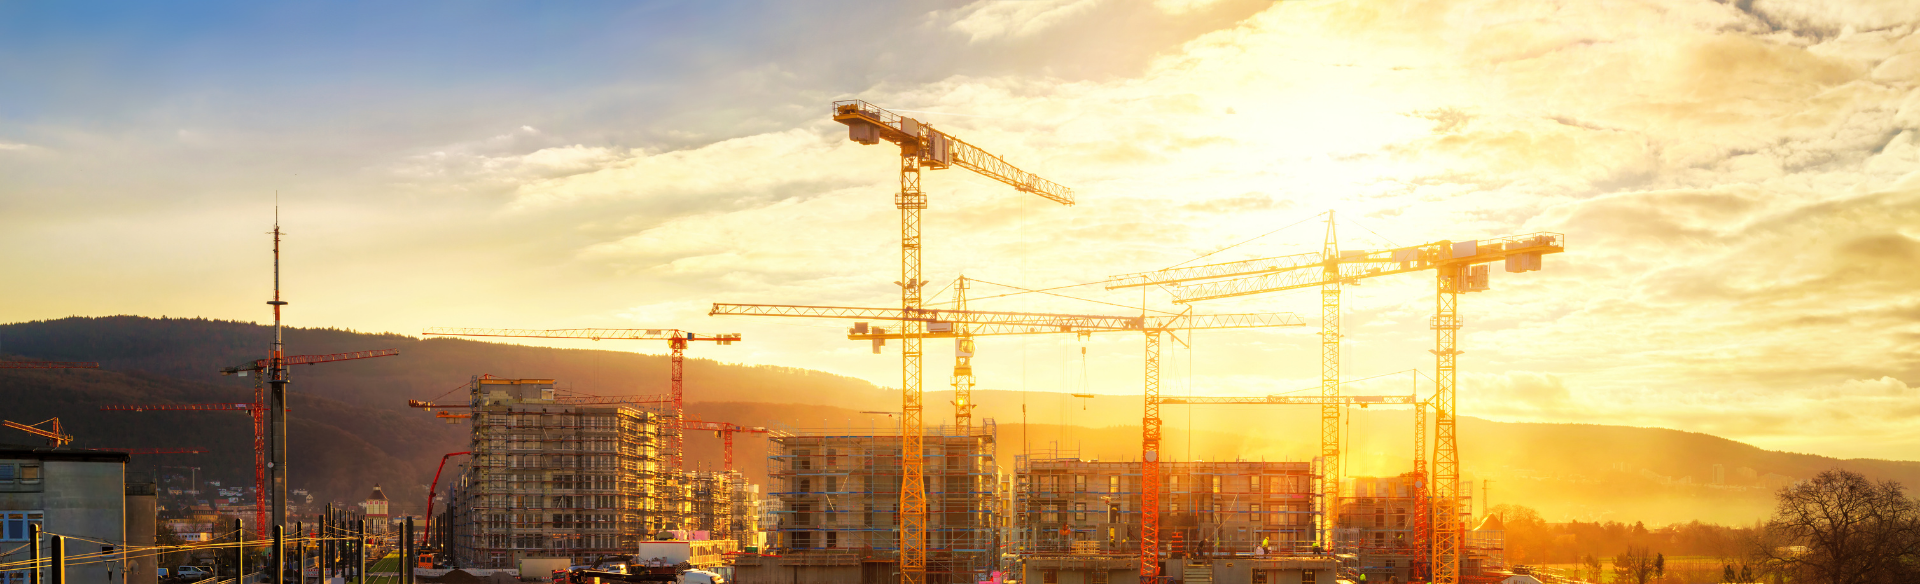 Construction Management Software Makes Jobsites Safer featured image